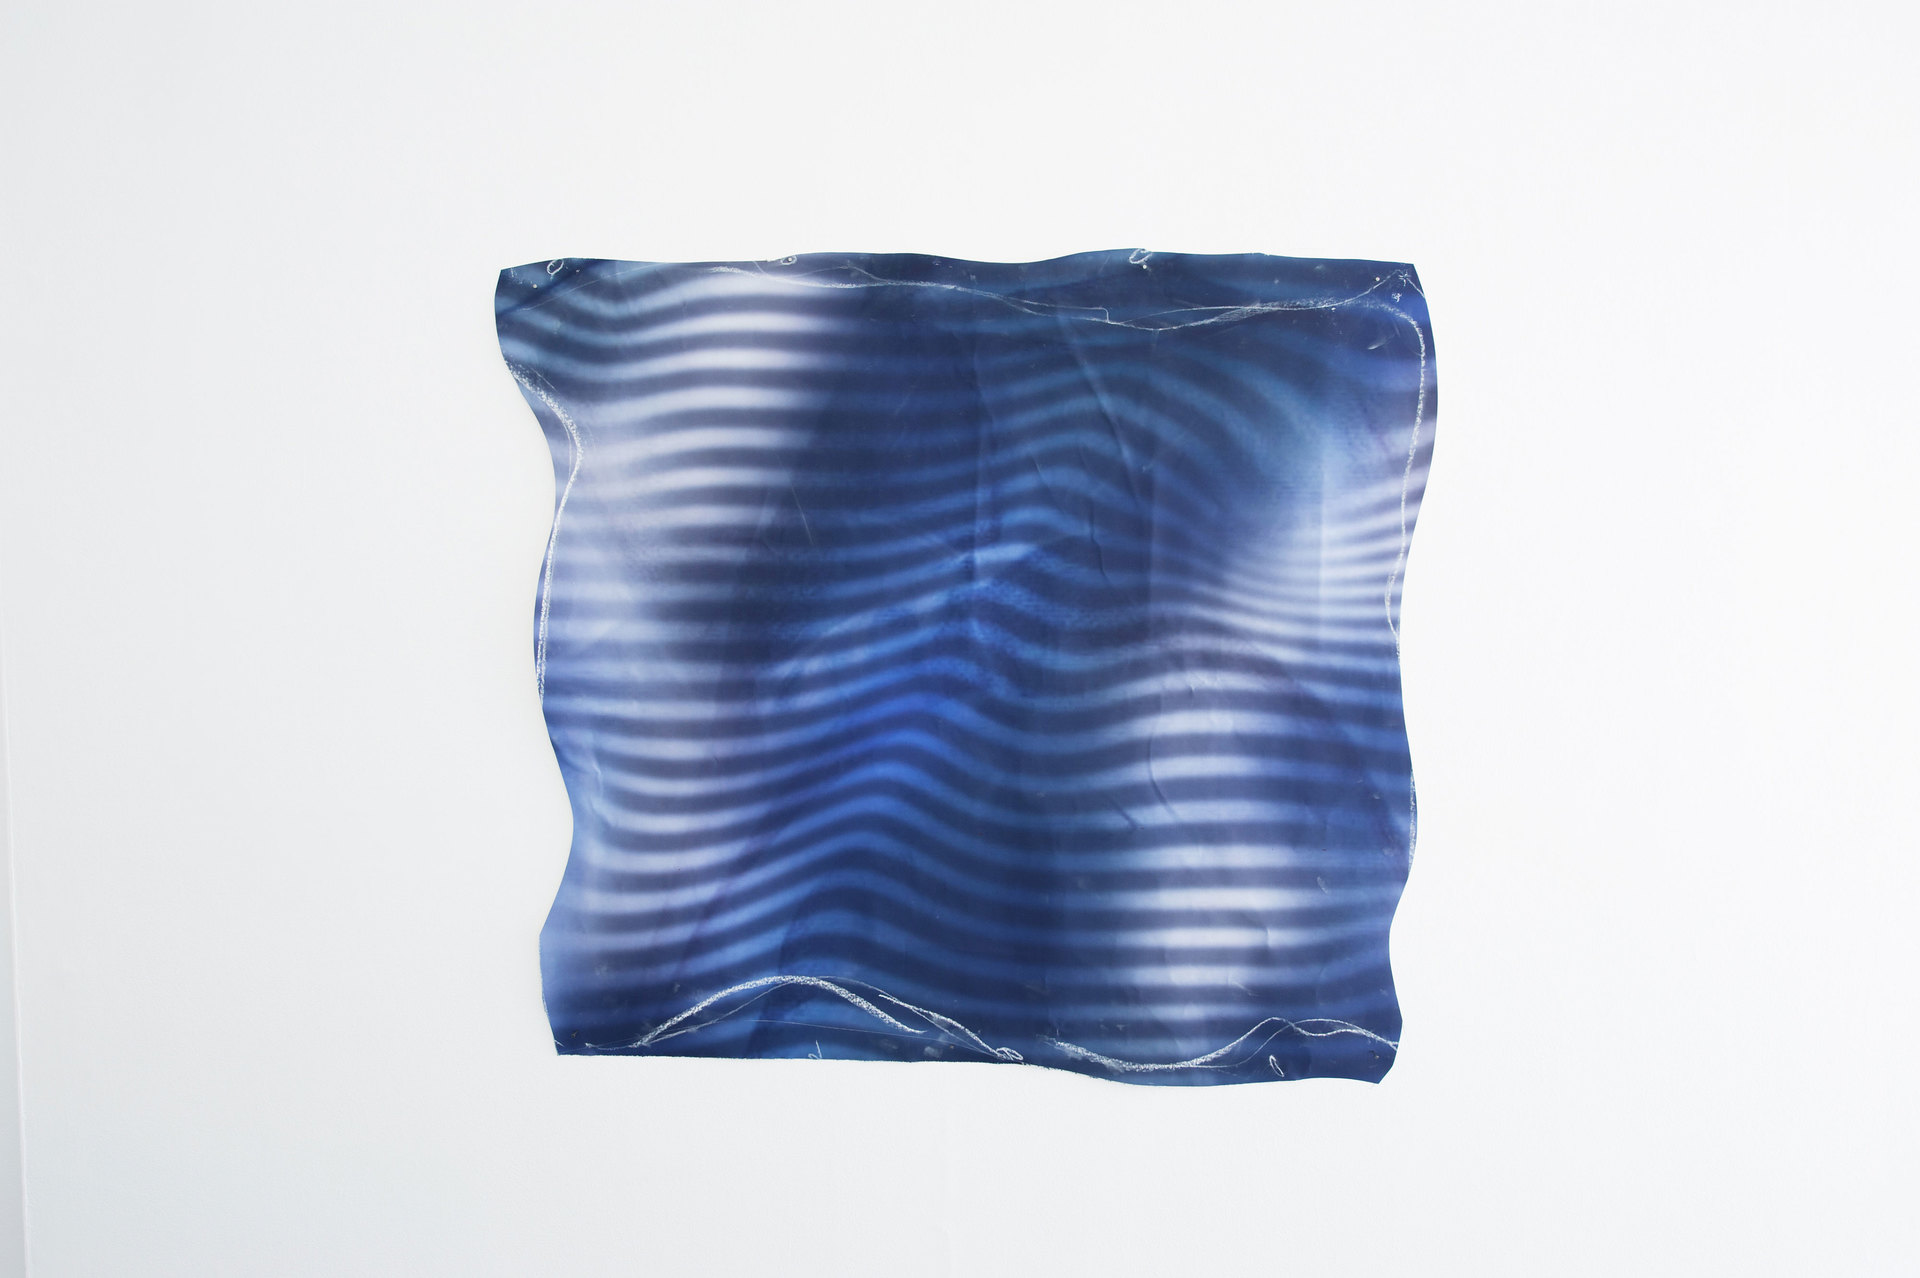 Florian Auer, Not Yet Titled (Blue Print), 2013, print on canvas, chalk, (130 x 115 cm)